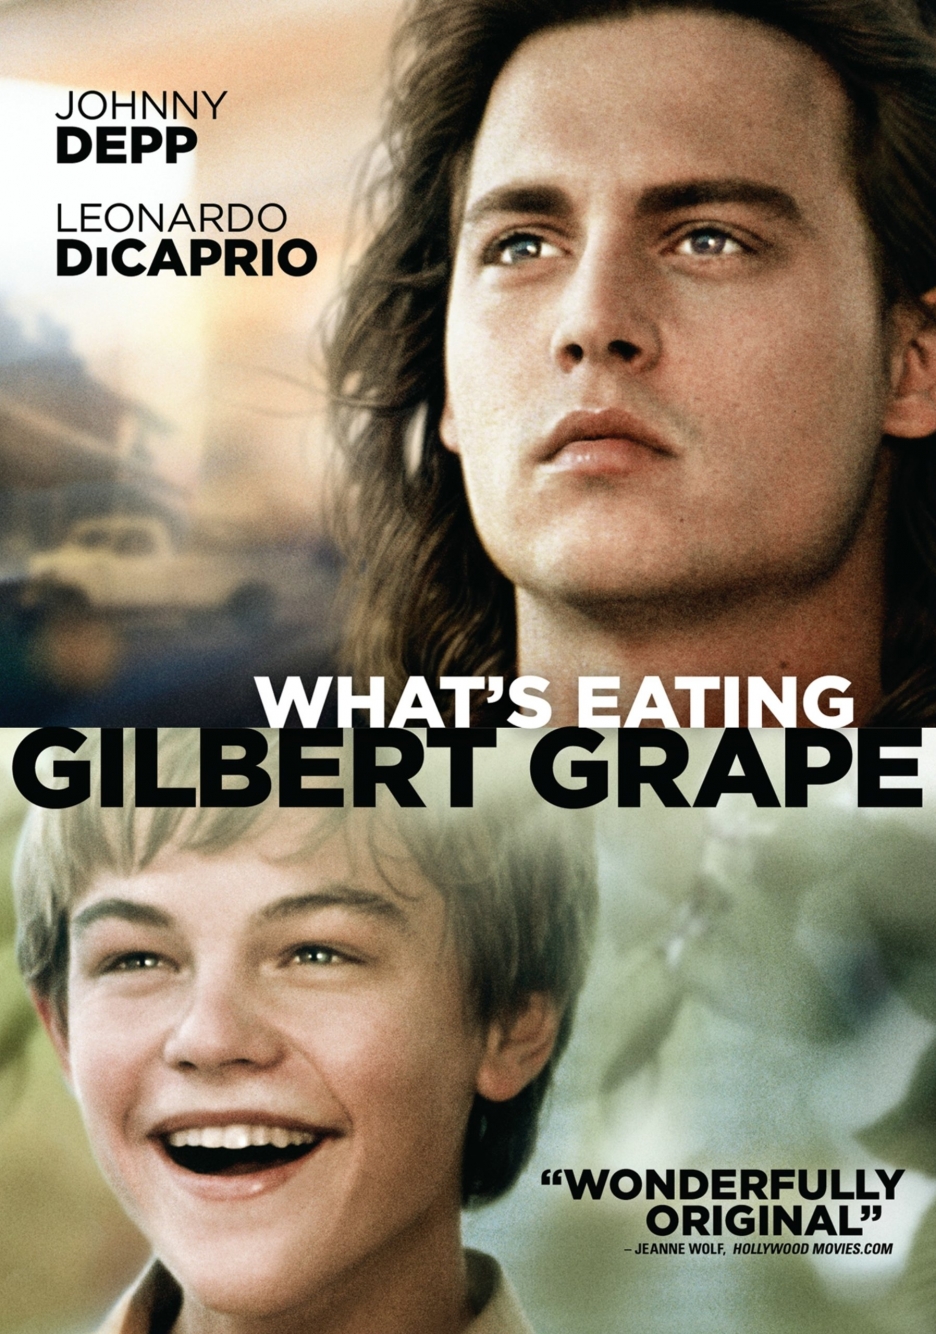 http://mariasmoviereviews.files.wordpress.com/2012/06/936full-whats-eating-gilbert-grape-poster.jpg